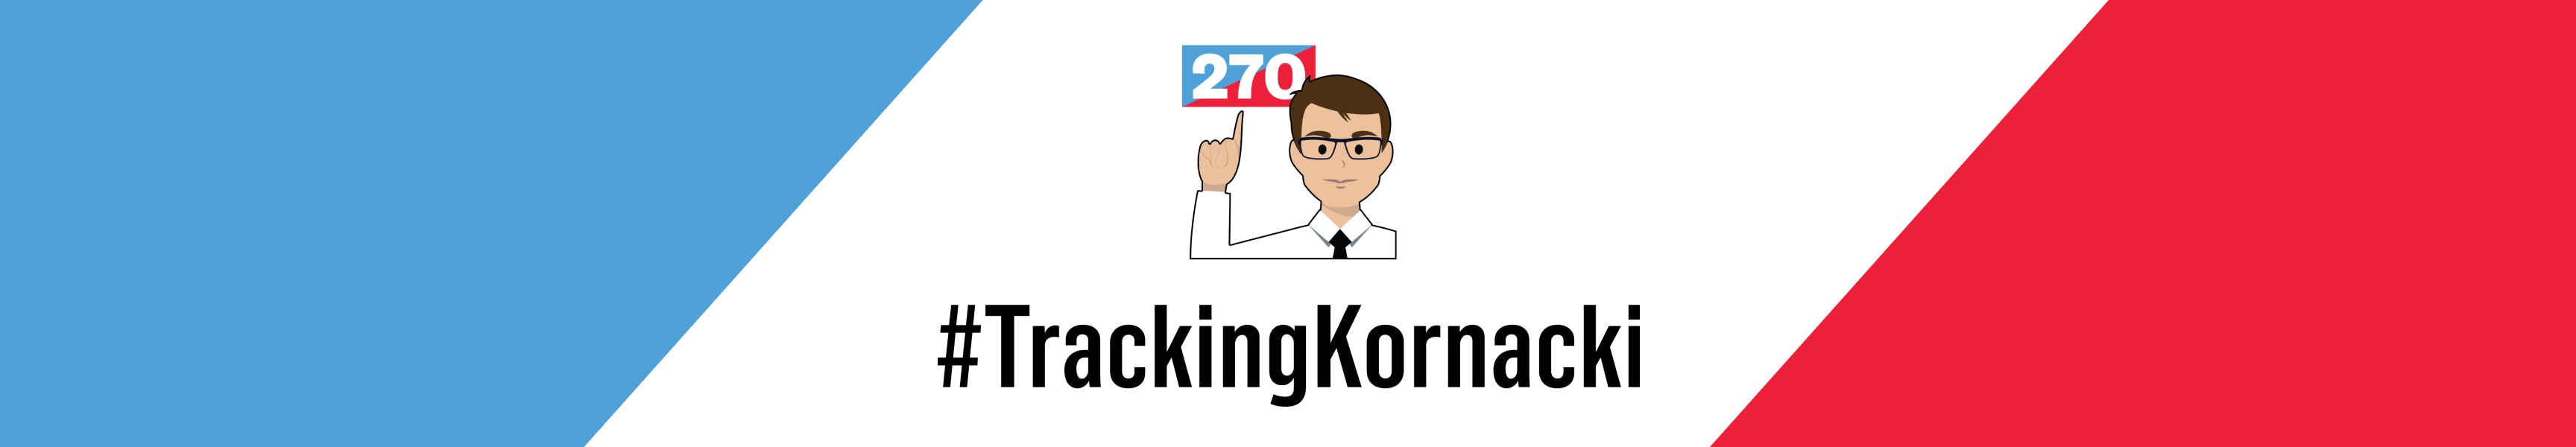 #TrackingKornacki